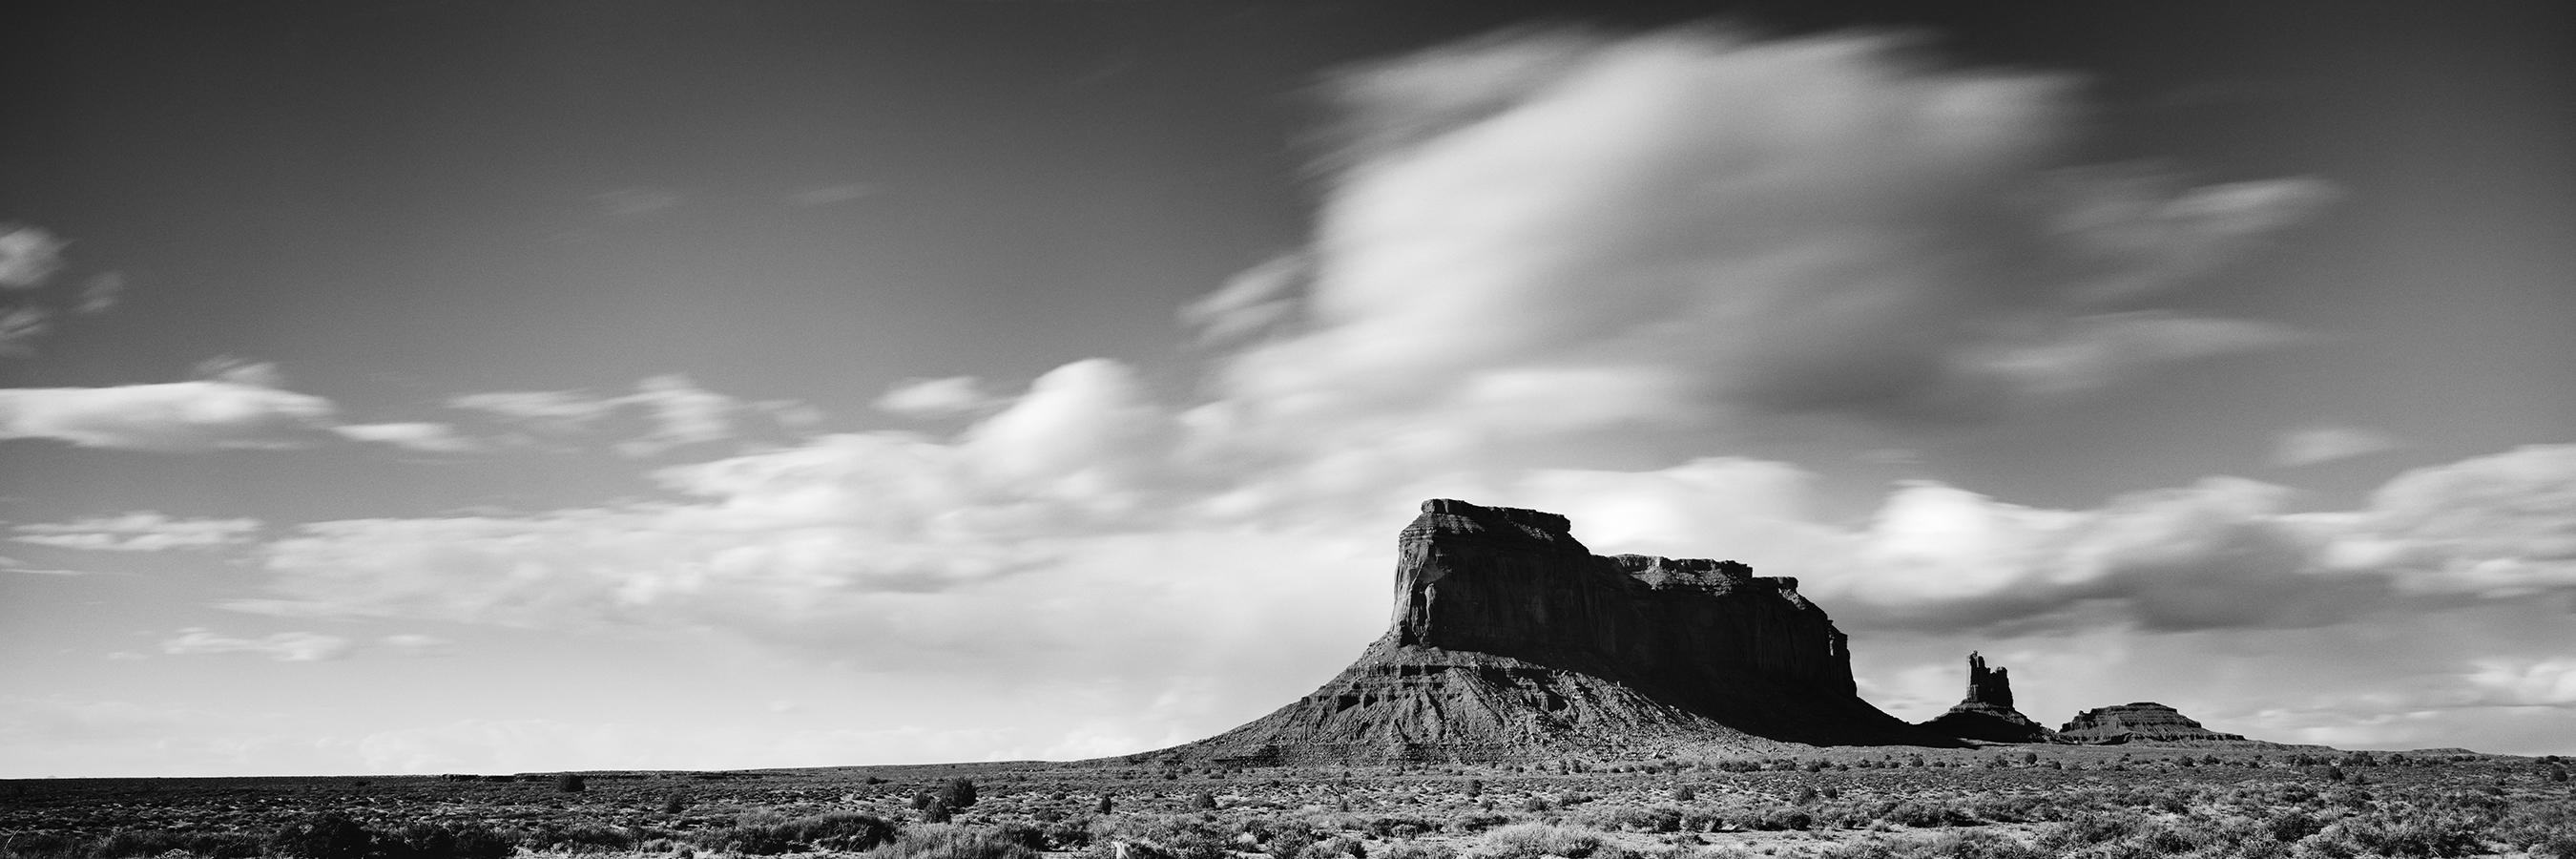 Wild West Panorama Utah black white photography death valley fine art landscape